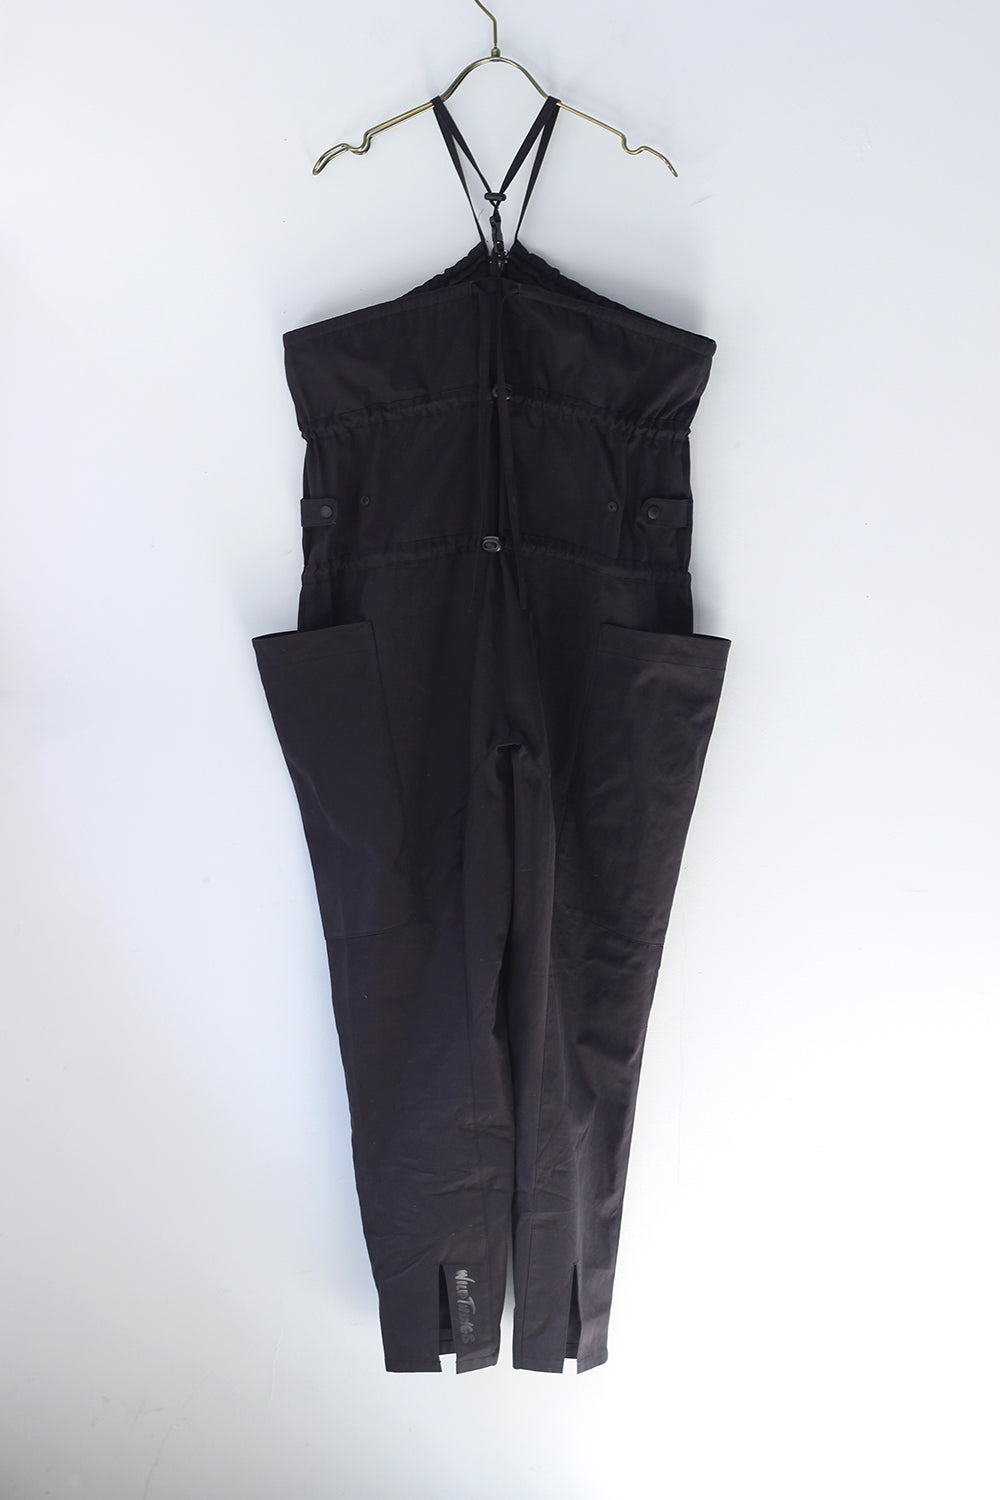 JUN MIKAMI × WILD THINGS "jump suit" (black)